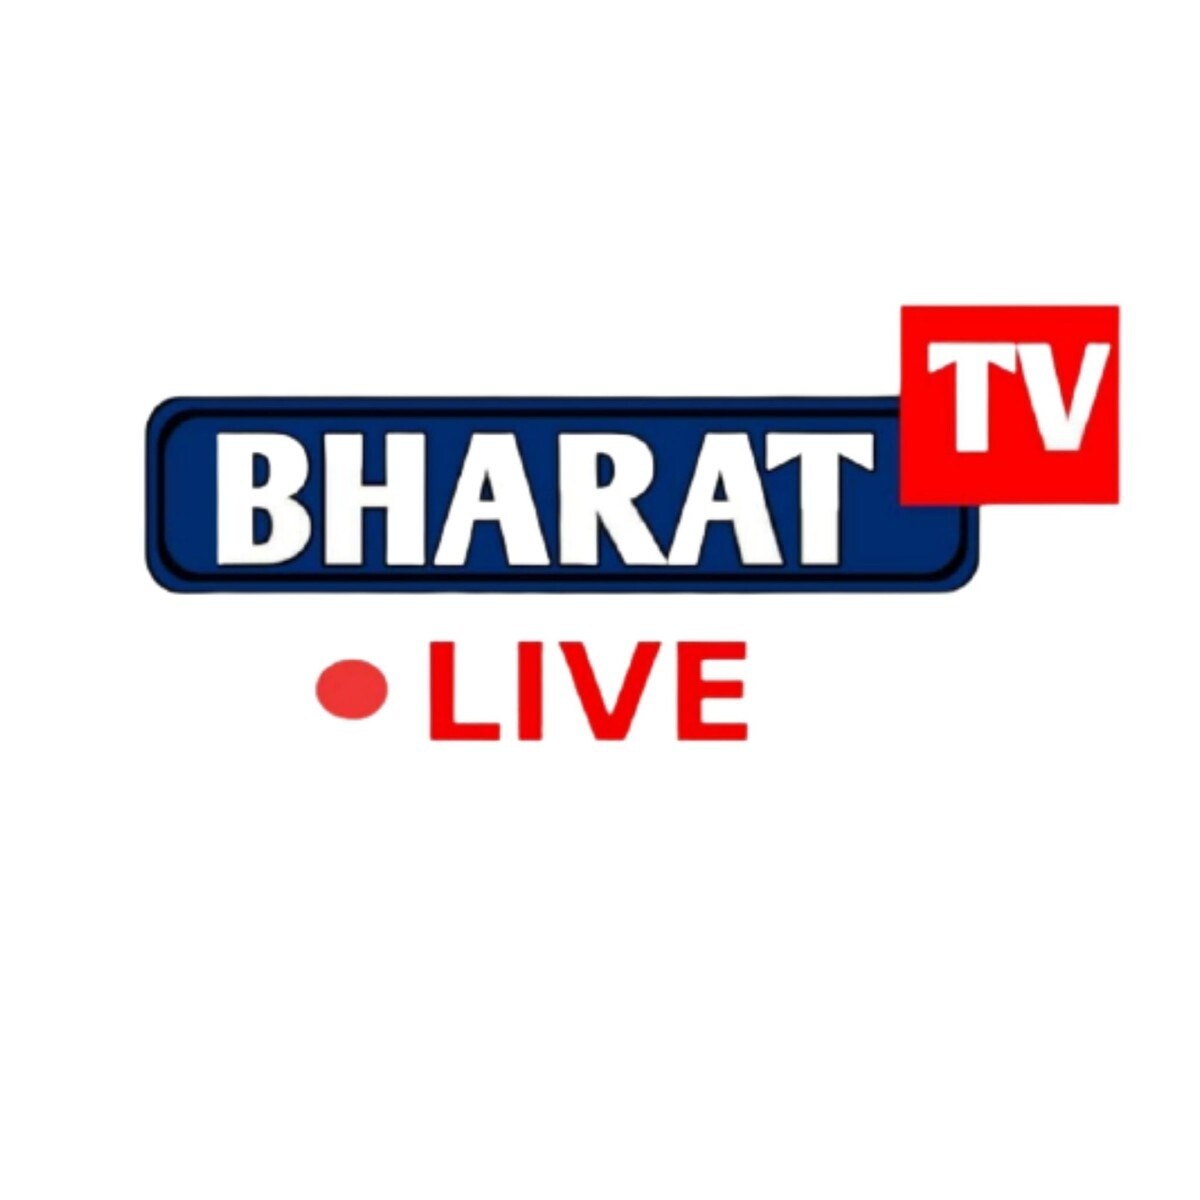 BHARAT TV LIVE photo